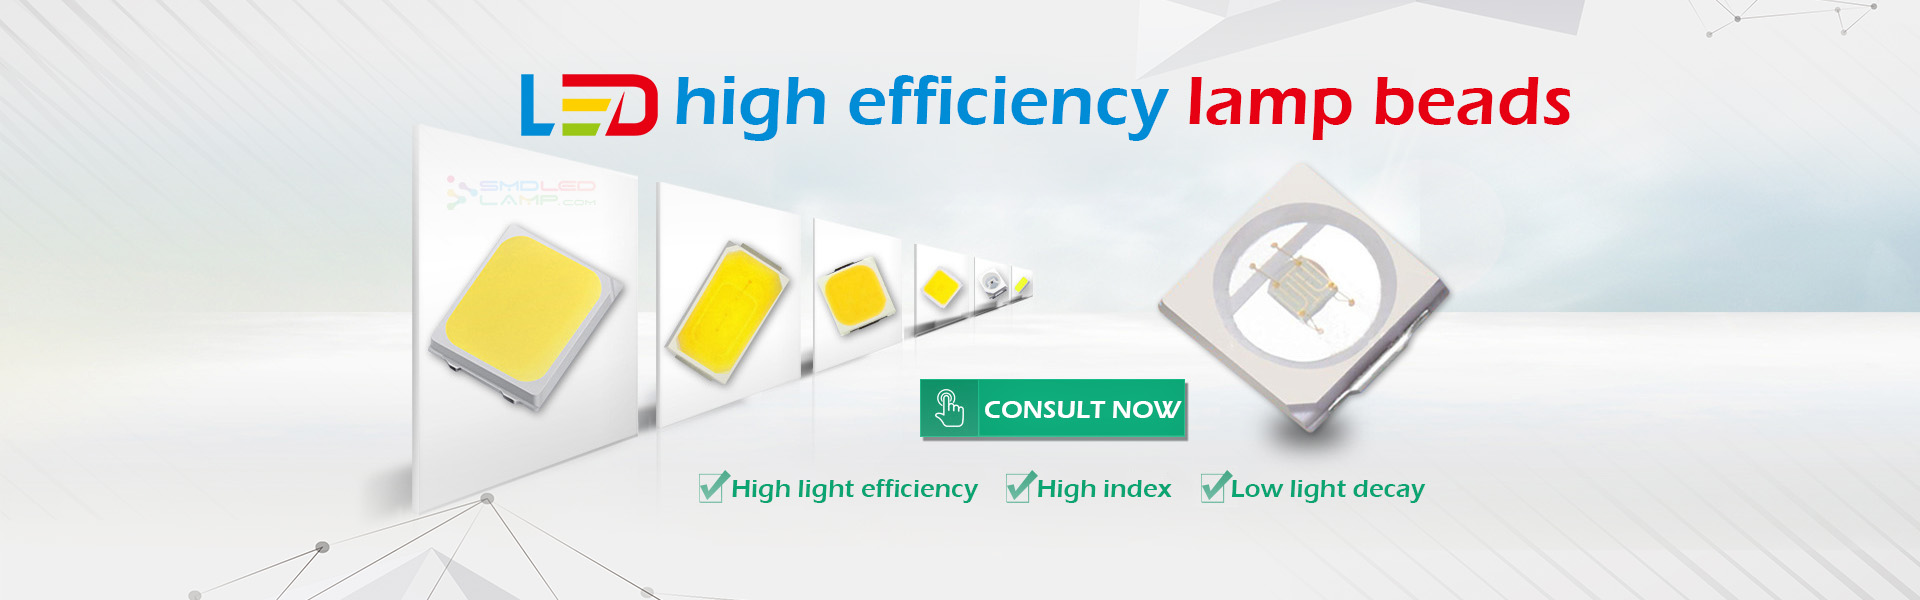 LED high efficiency lamp beads